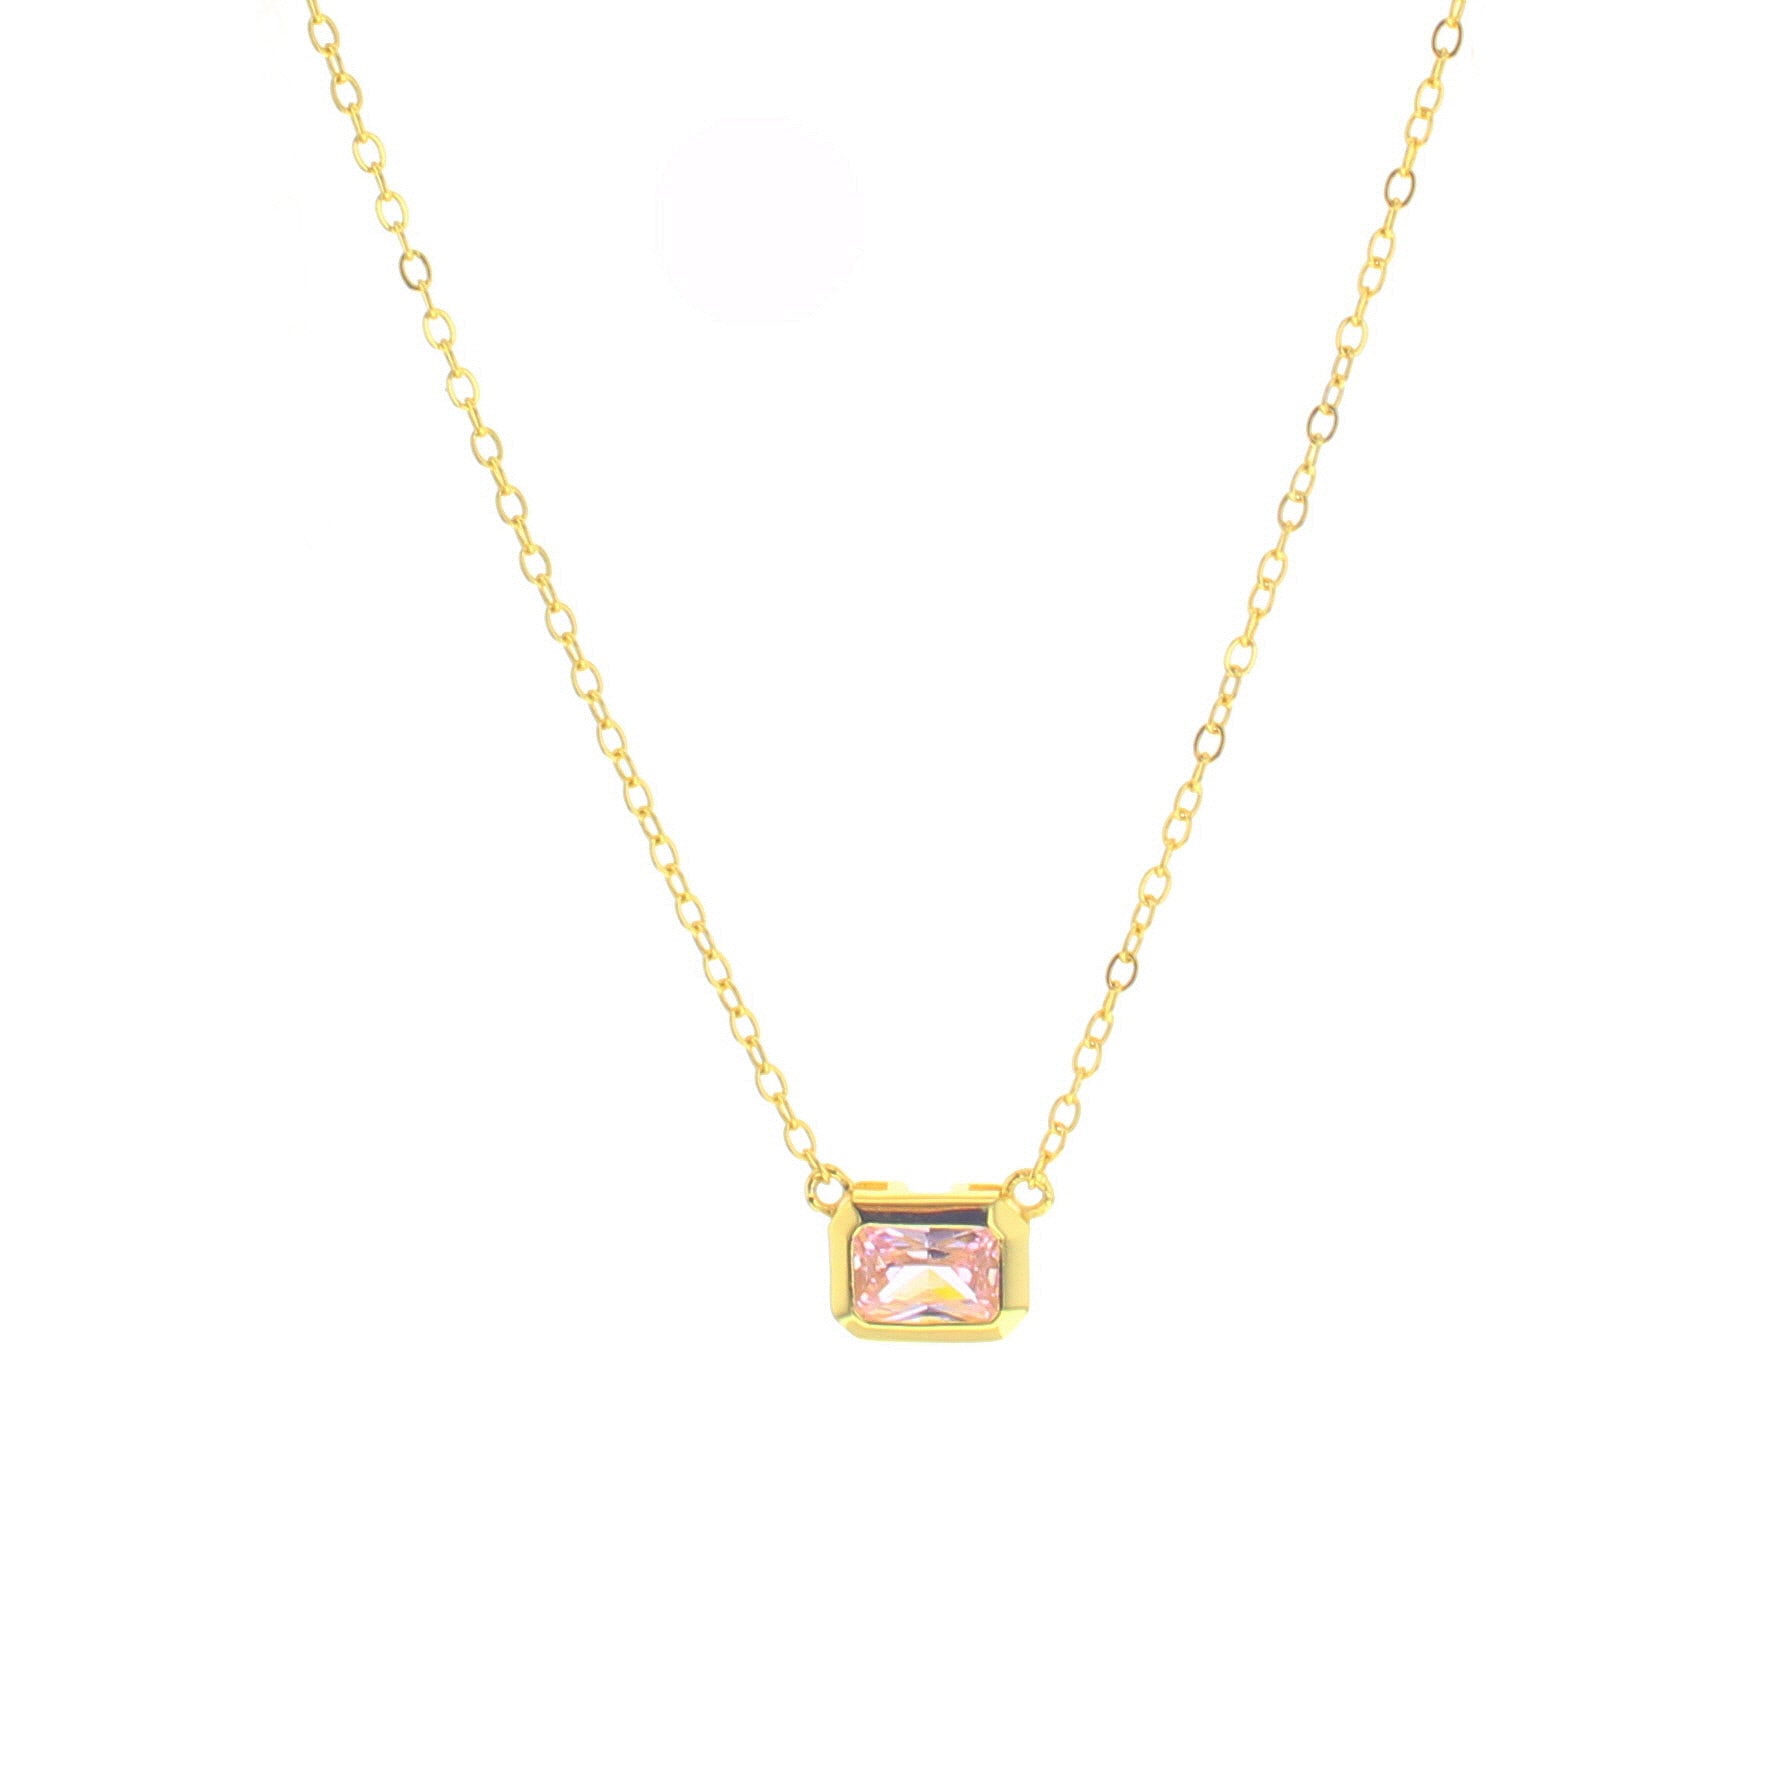 Nani Necklace - Morganite Crystal